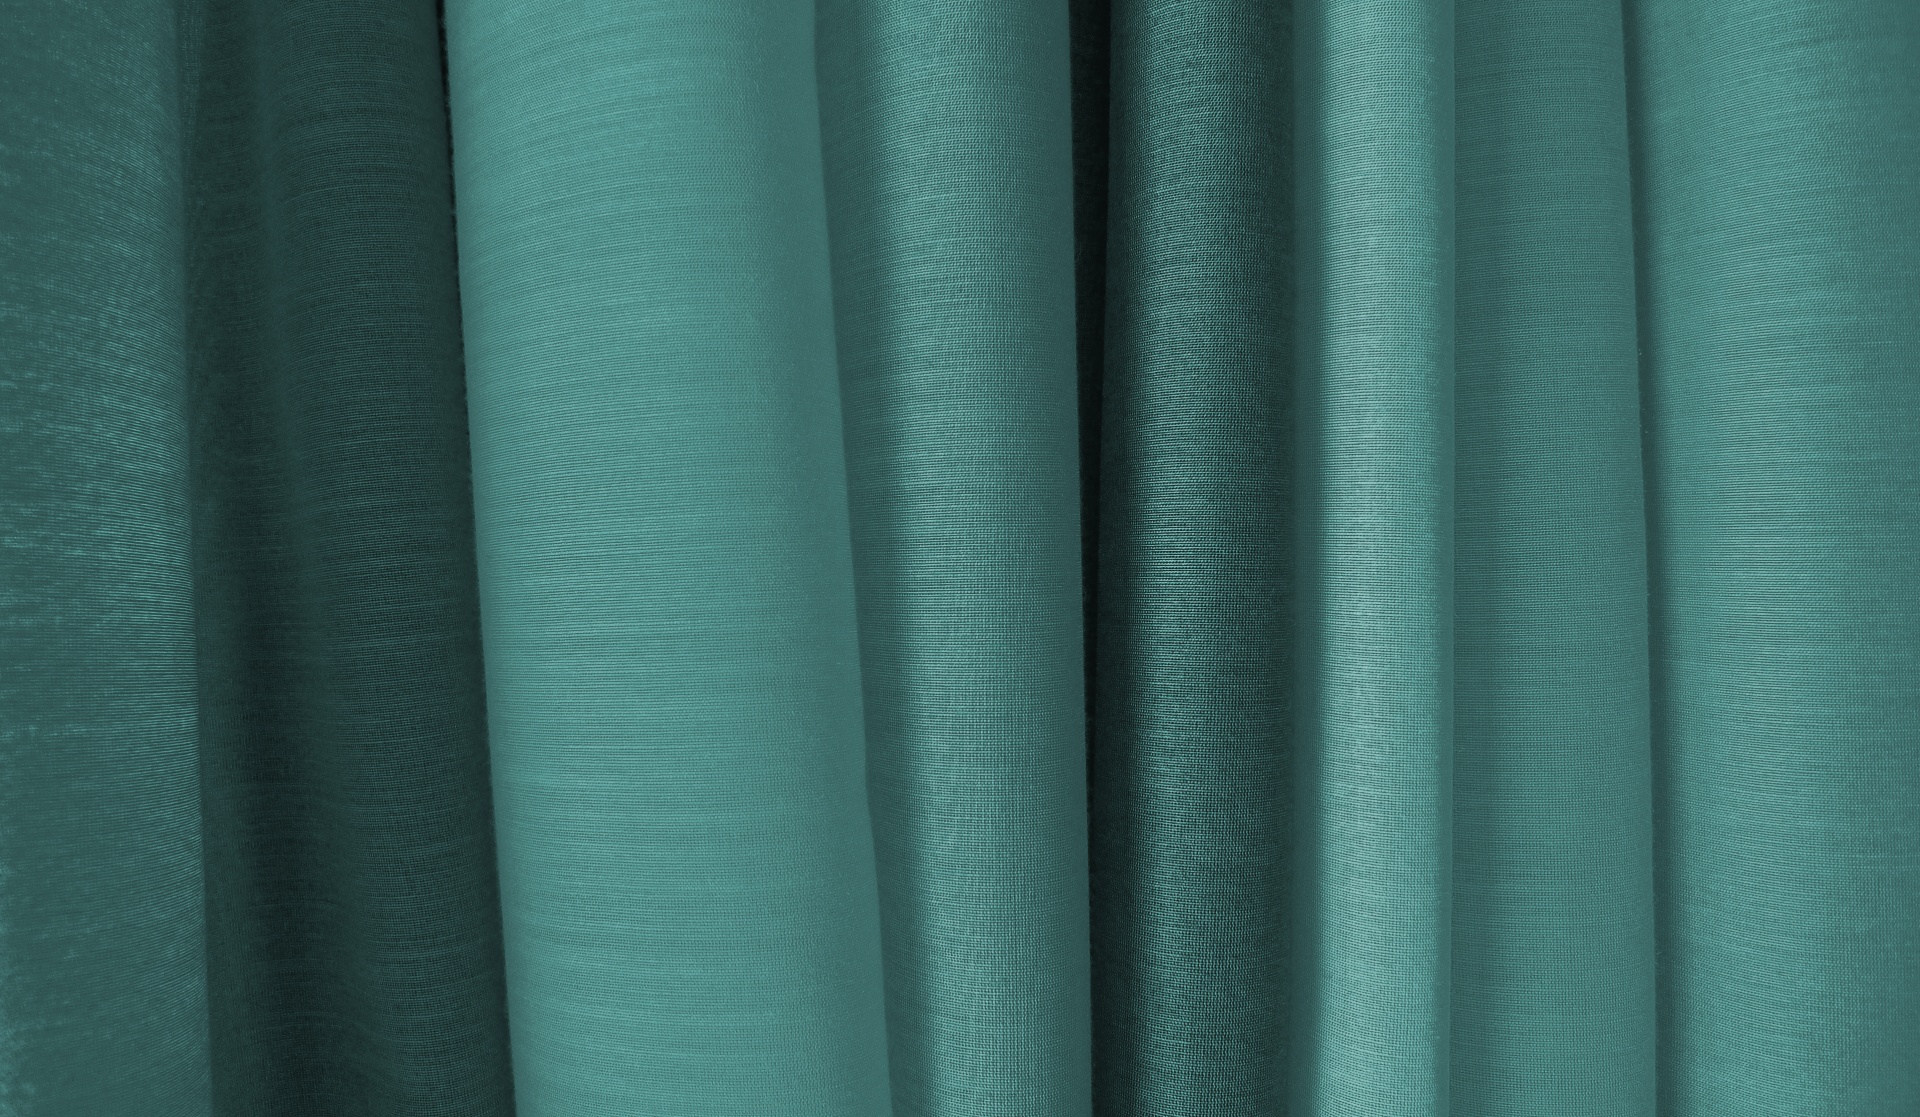 Cortinas, cortinas de tecido Teal